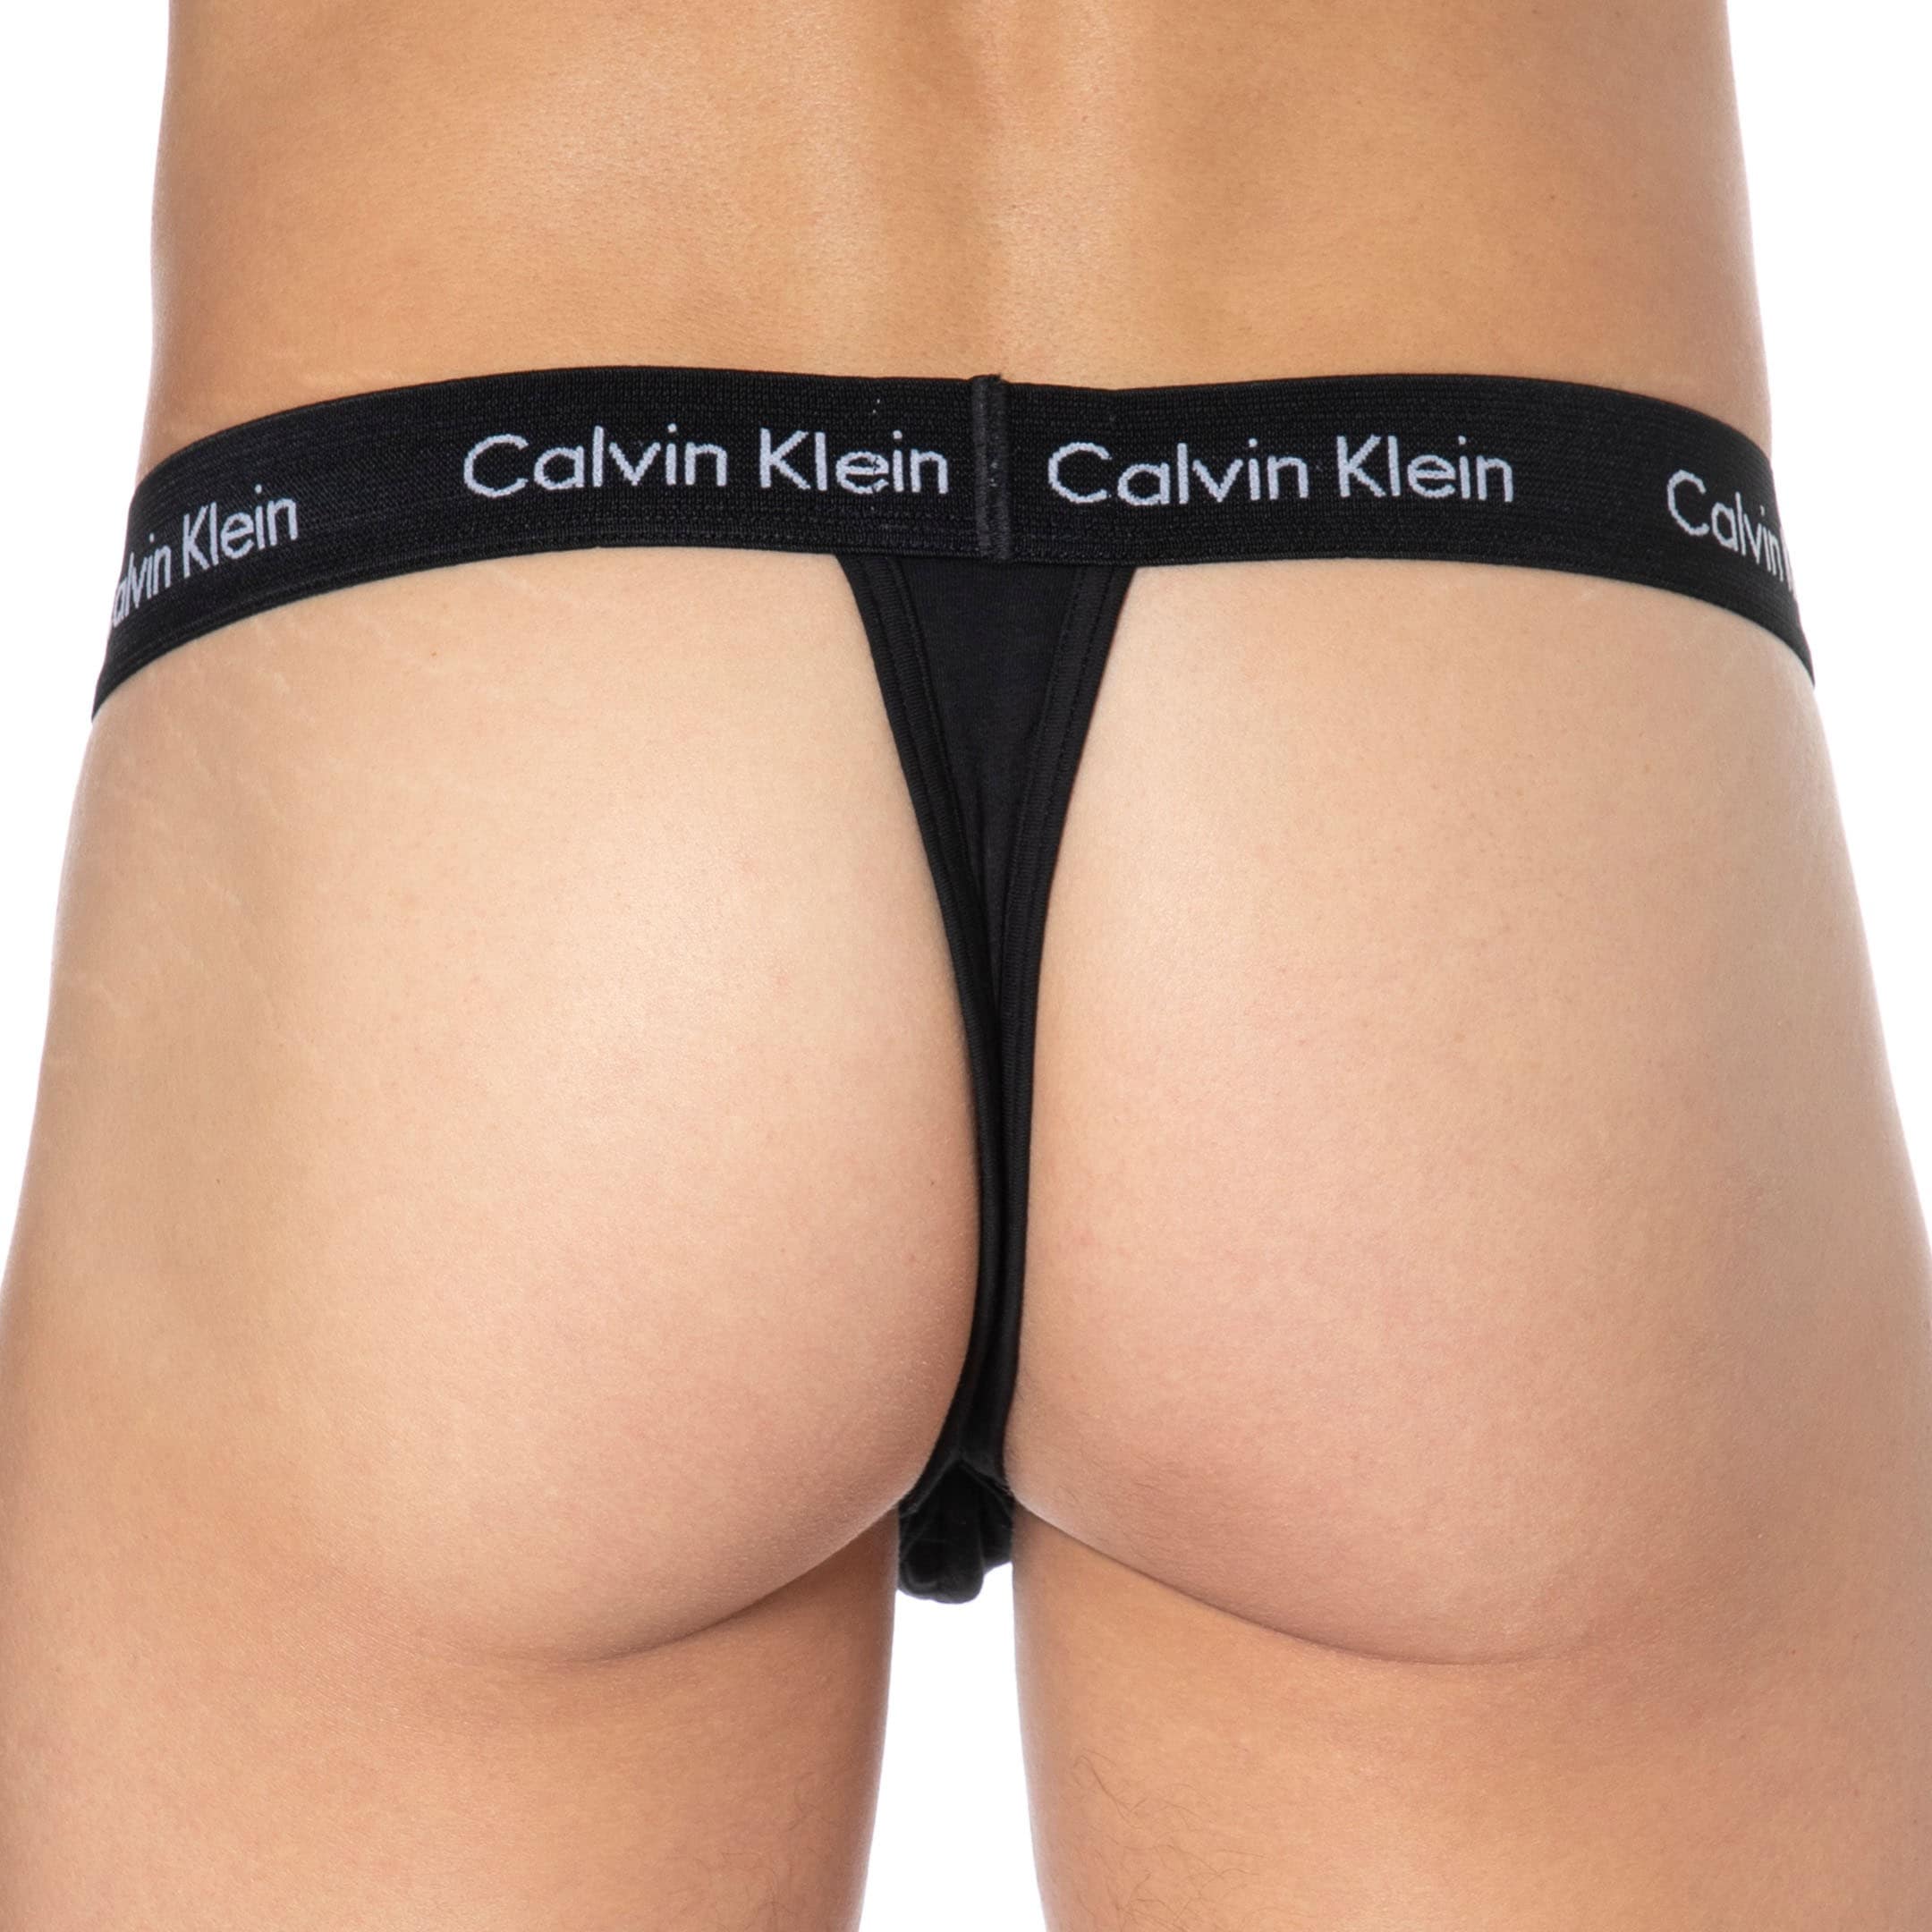 NWT Calvin Klein Grey & Black Thong Set 2 pc